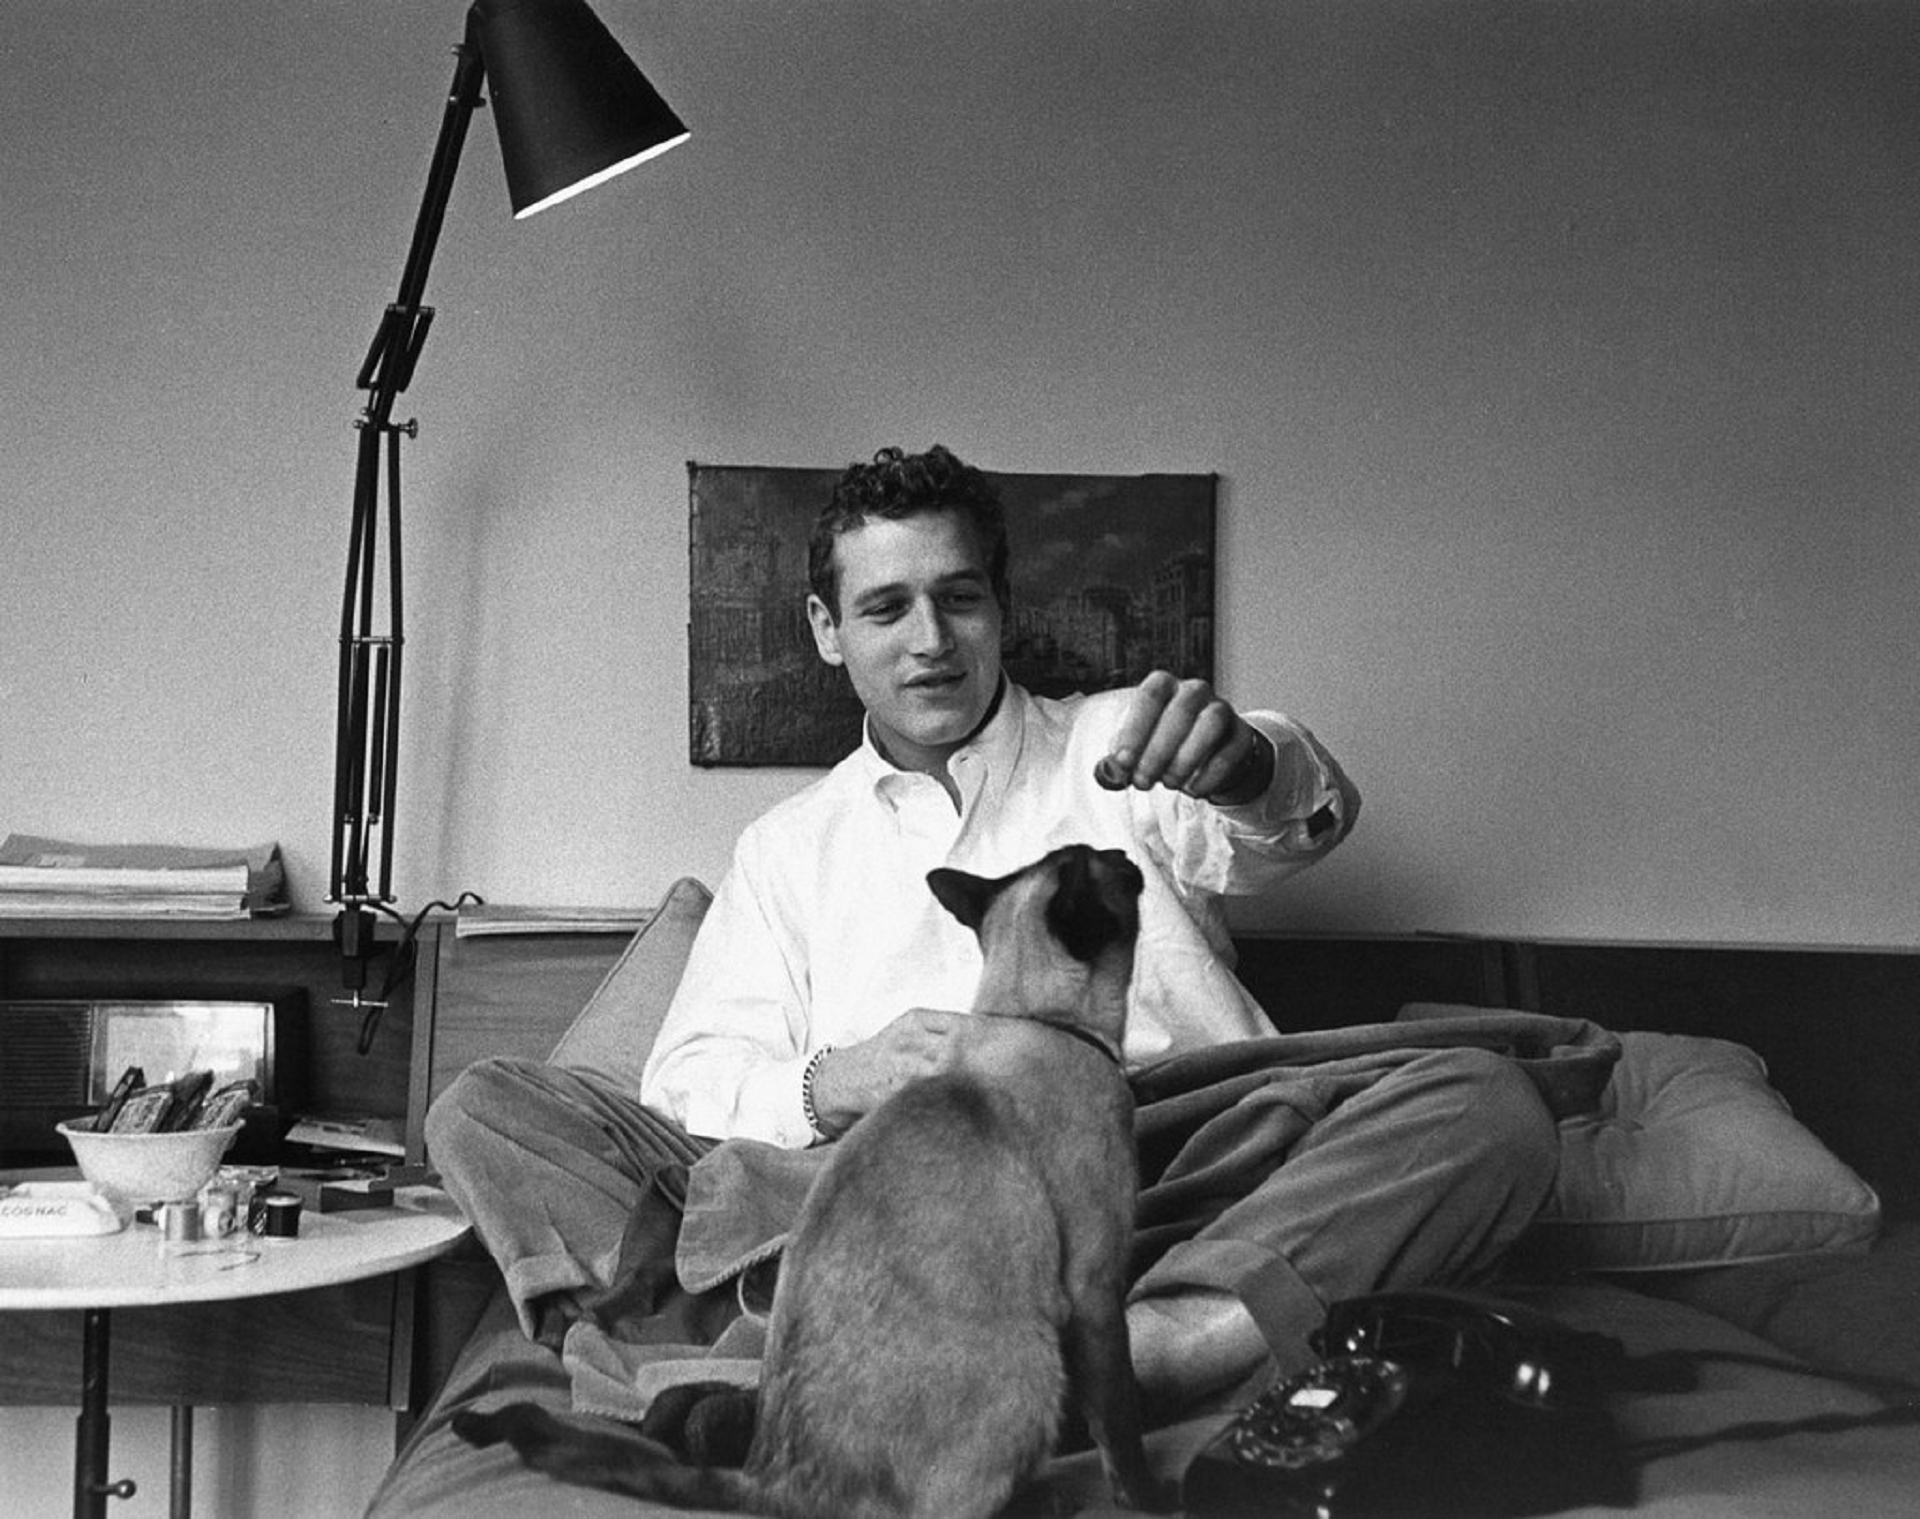 Paul Newman Images